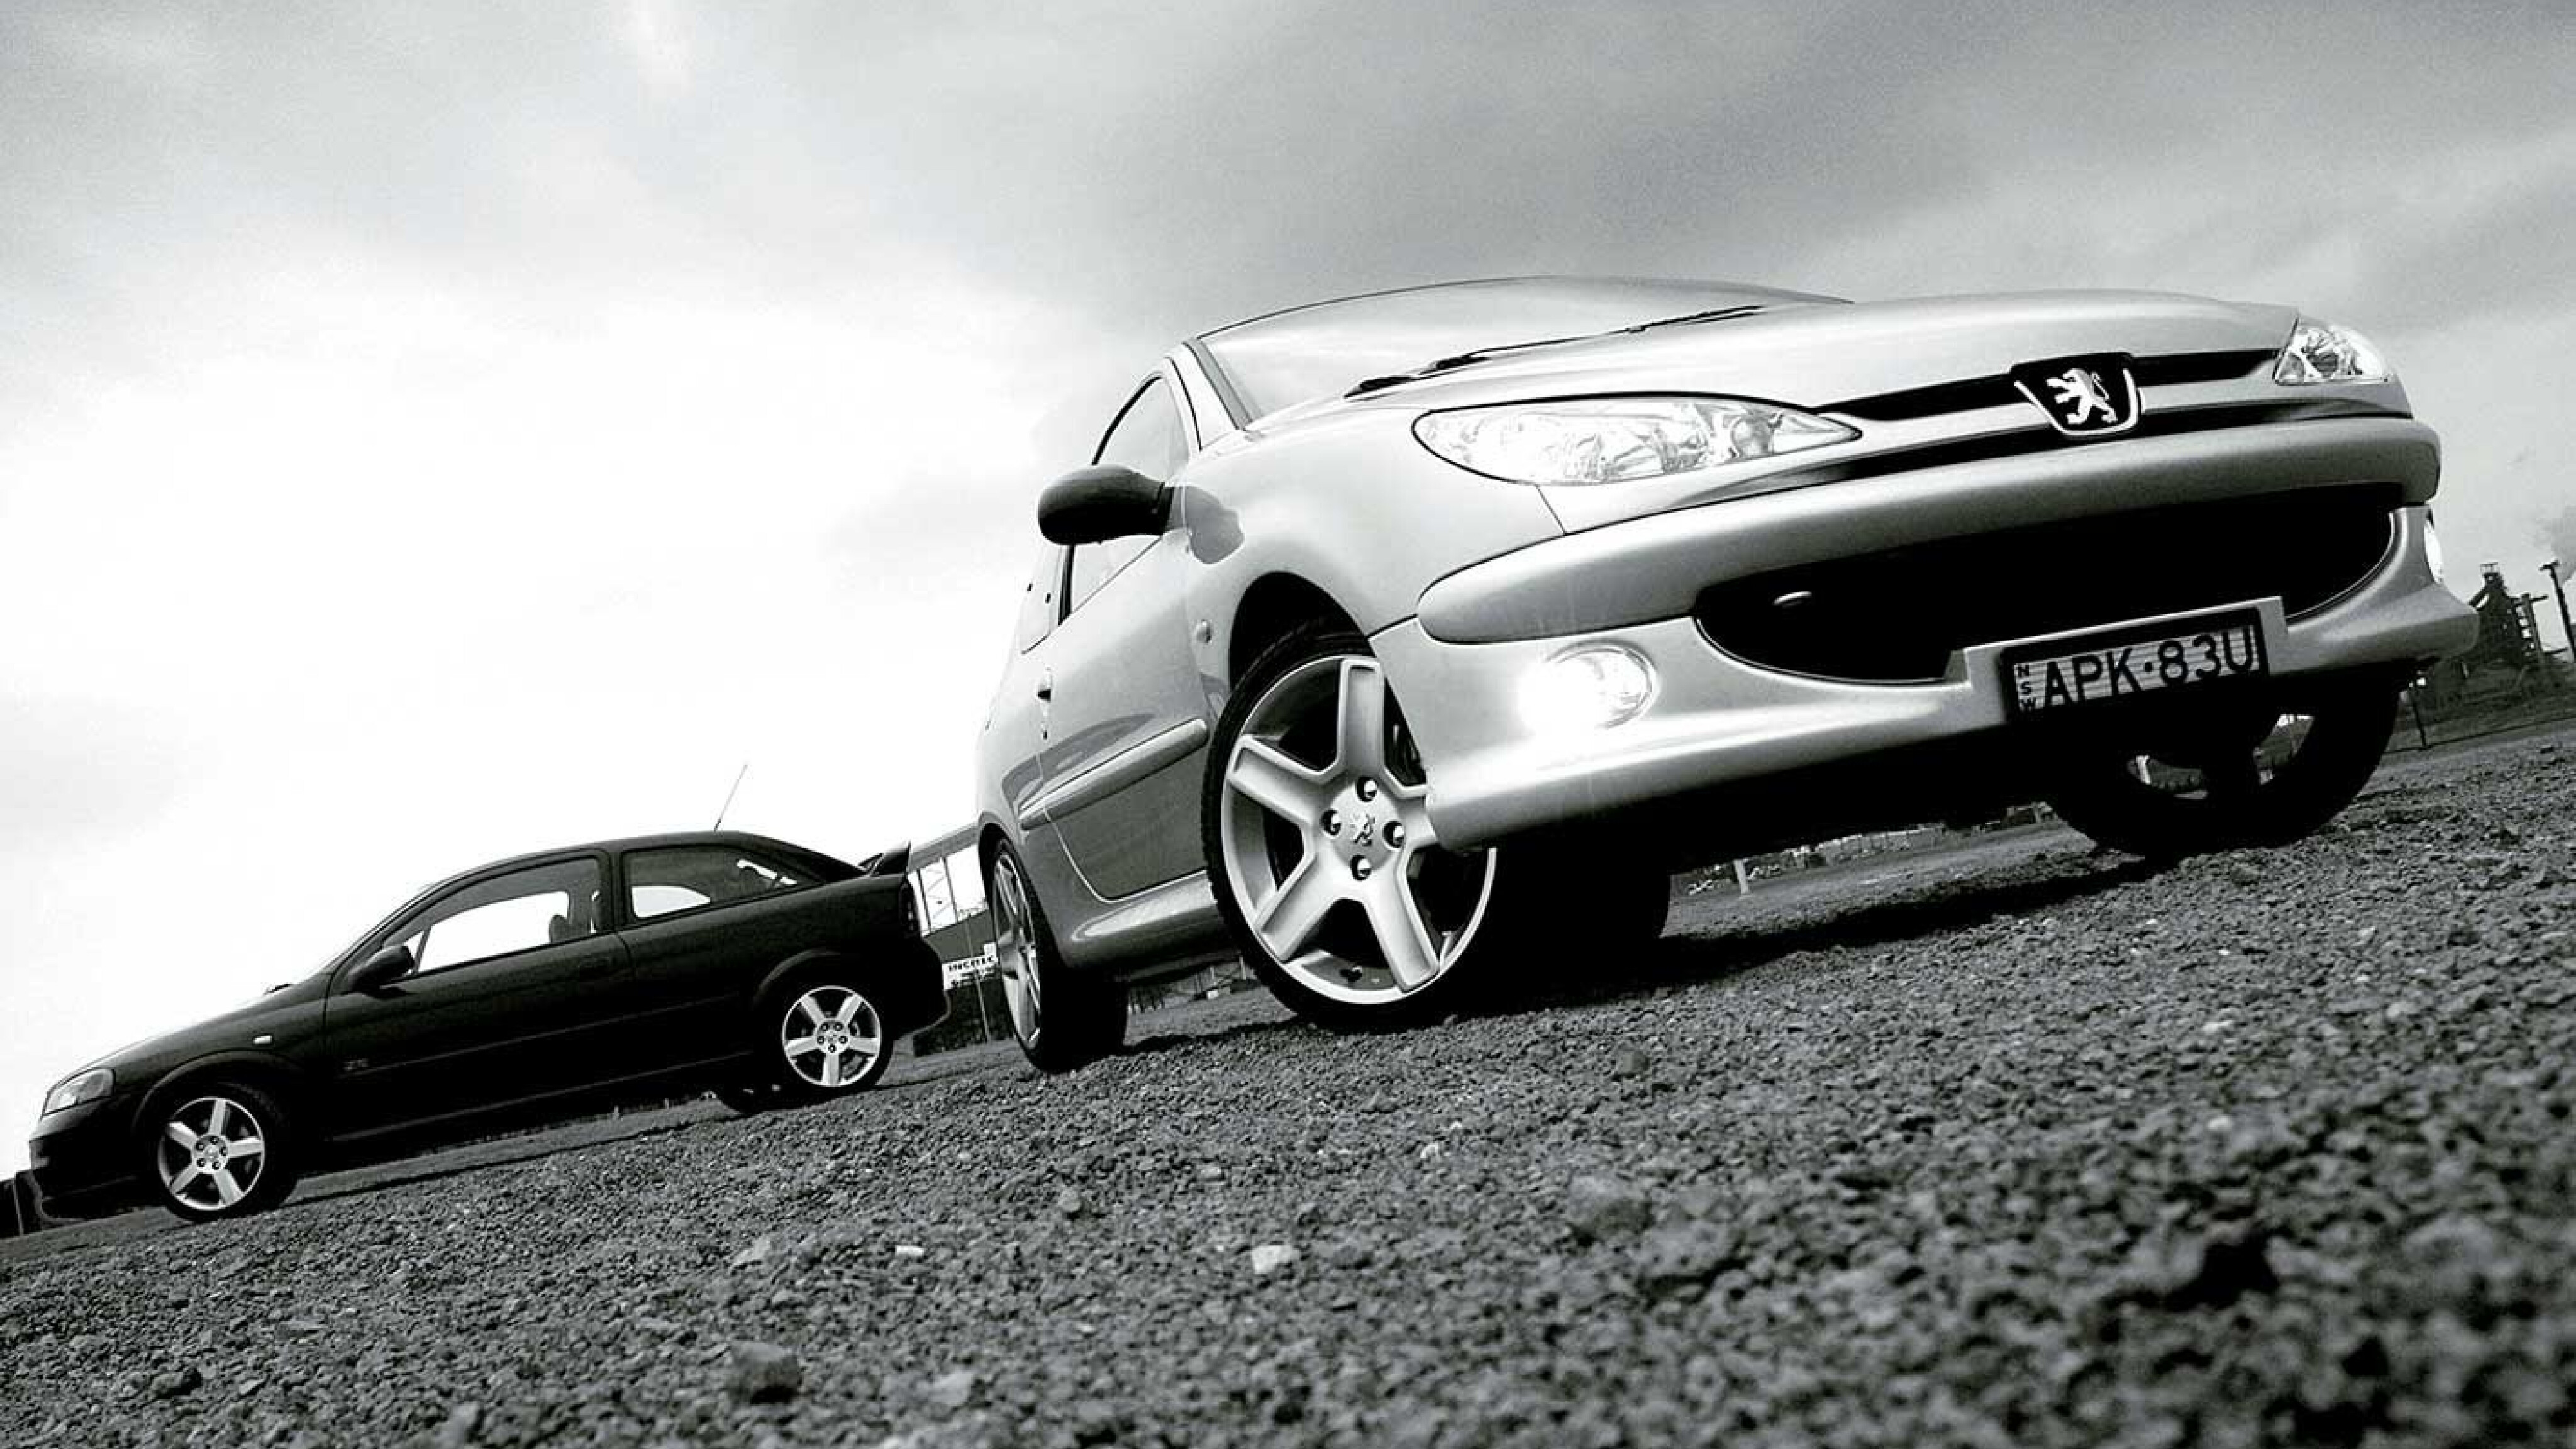 2004 Holden Astra SRi Turbo vs Peugeot 206 GTi 180 comparison review:  classic MOTOR